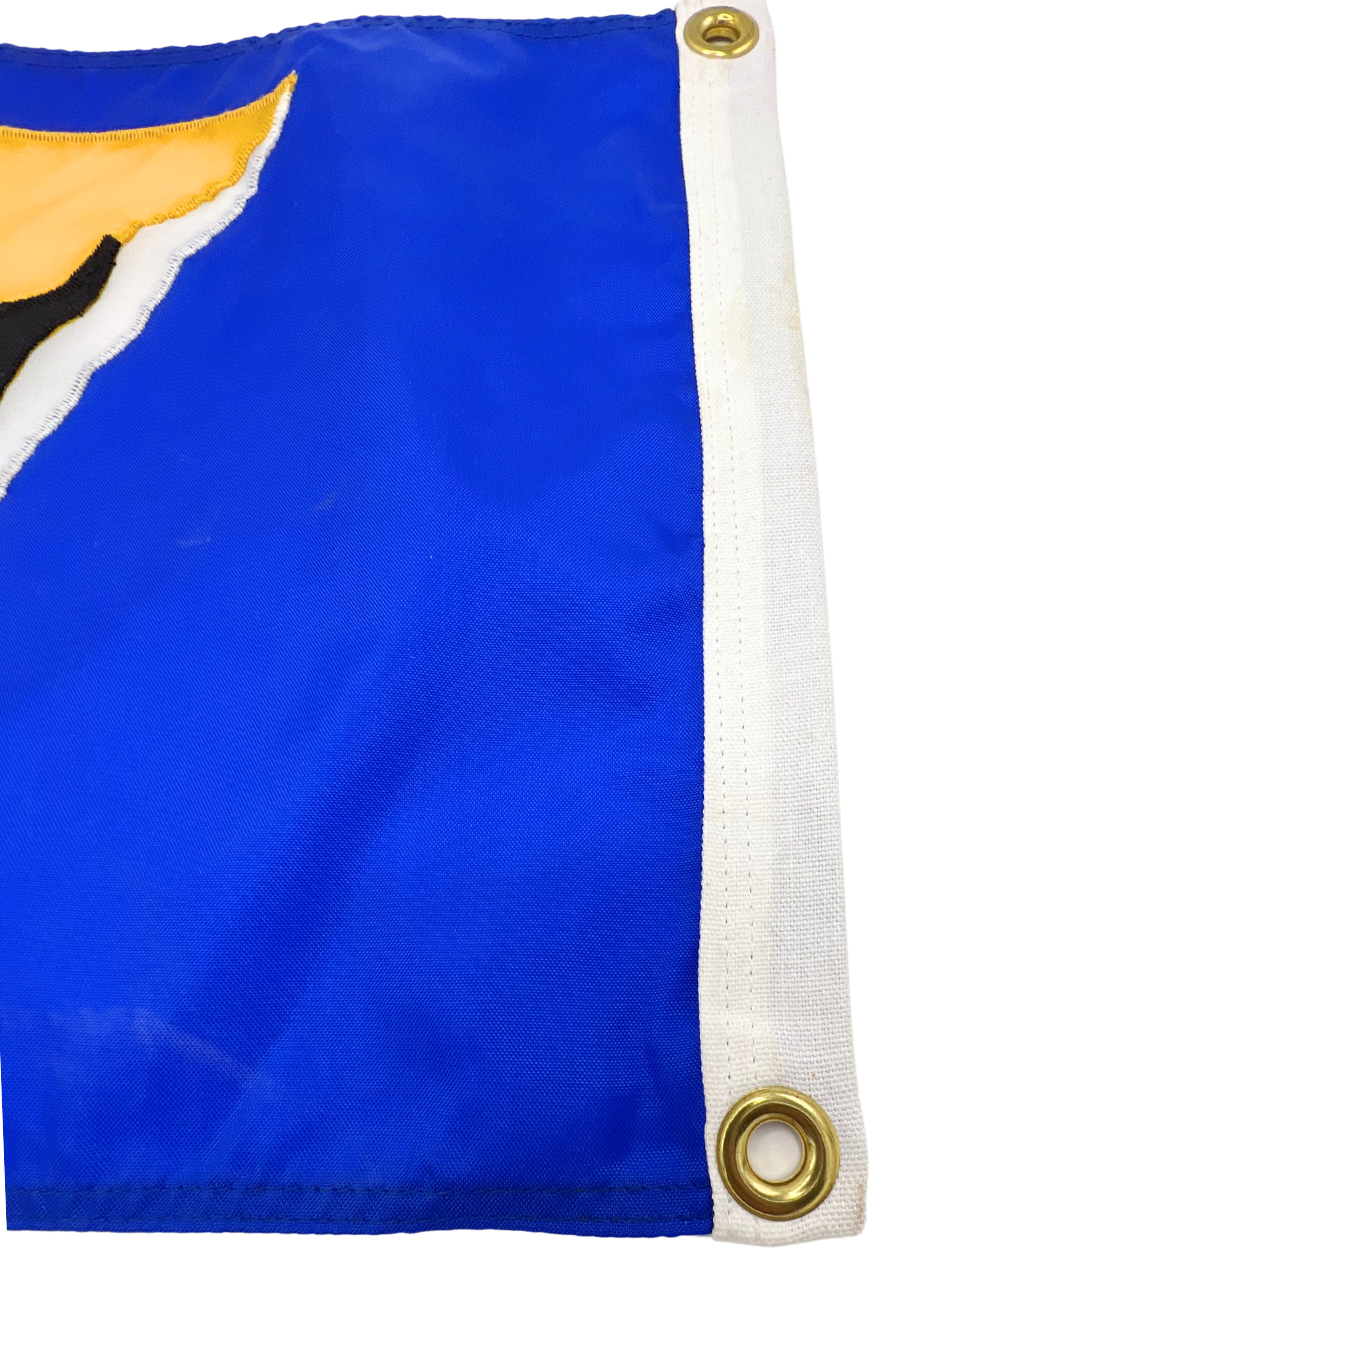 St. Lucia courtesy flag